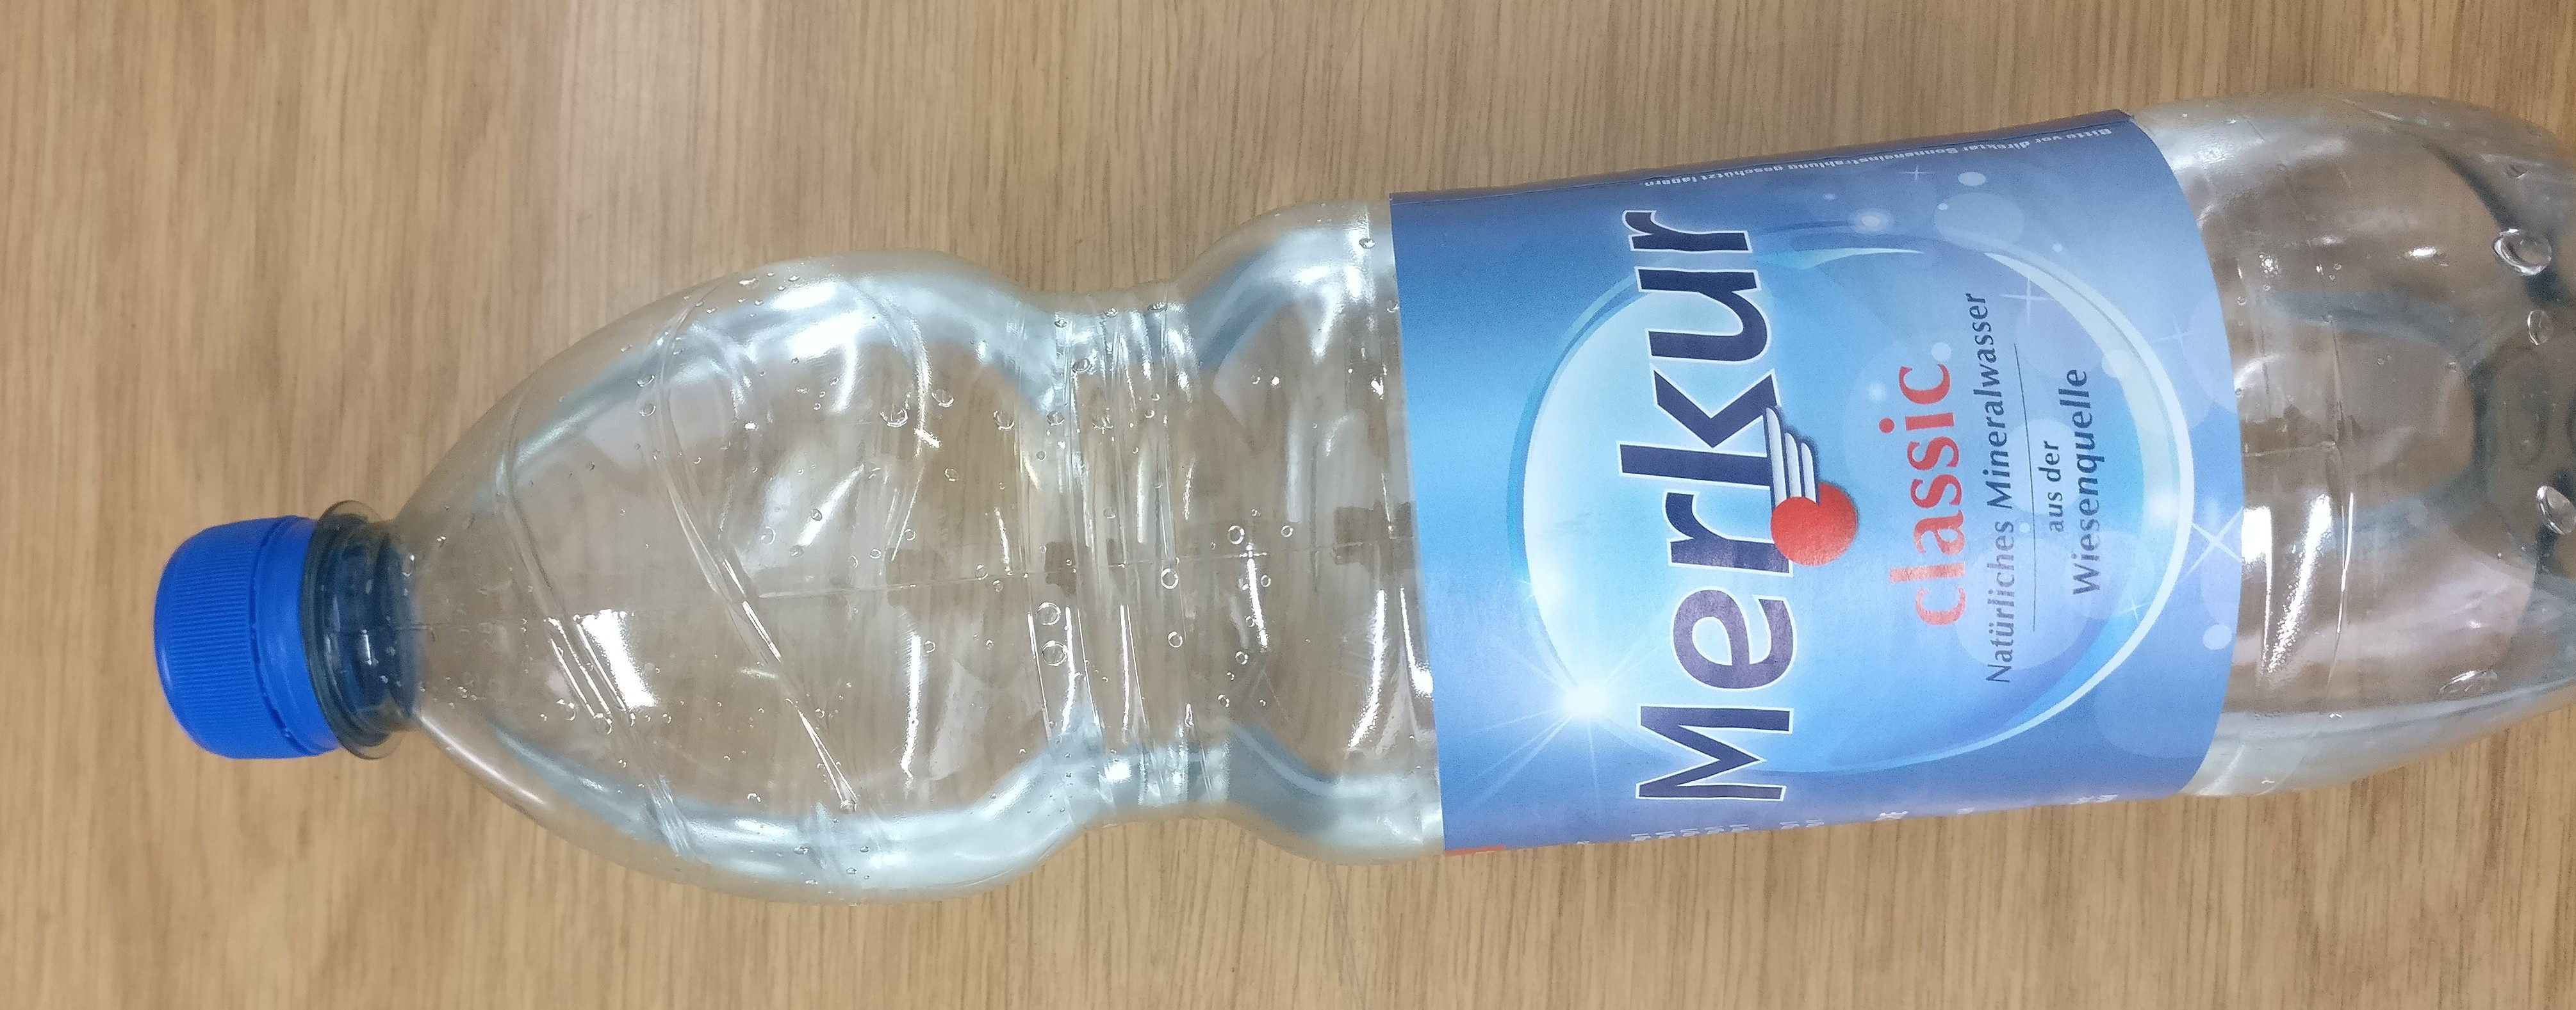 Mineralwasser - Product - de